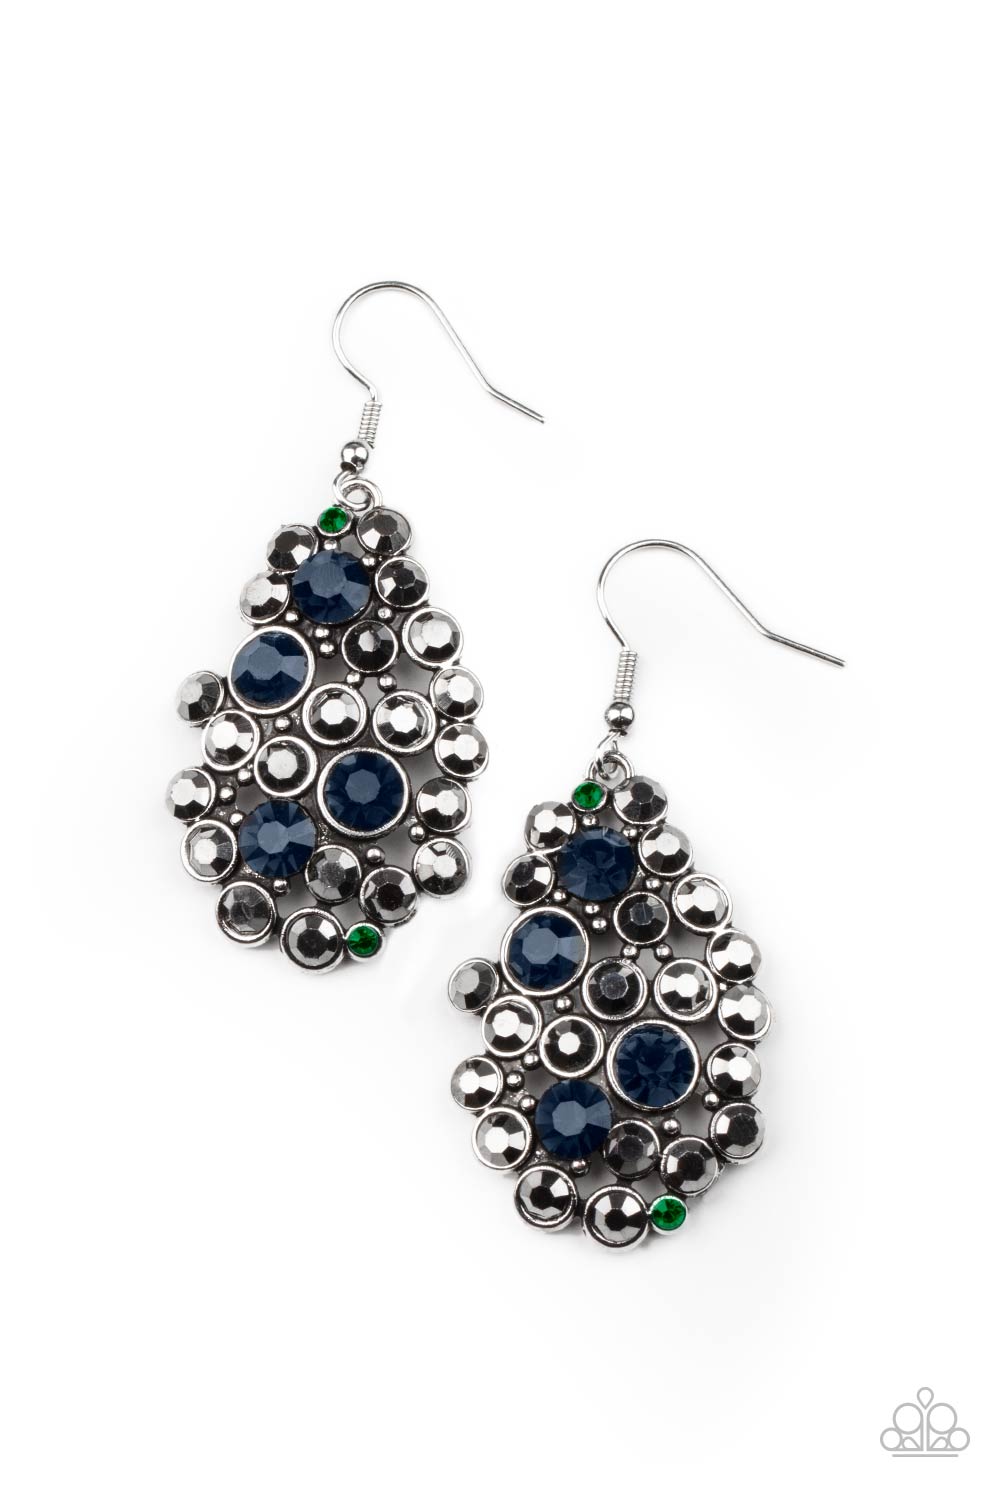 Smolder Effect Multi, Blue, Green and Hematite Rhinestone Earrings - Paparazzi Accessories- lightbox - CarasShop.com - $5 Jewelry by Cara Jewels